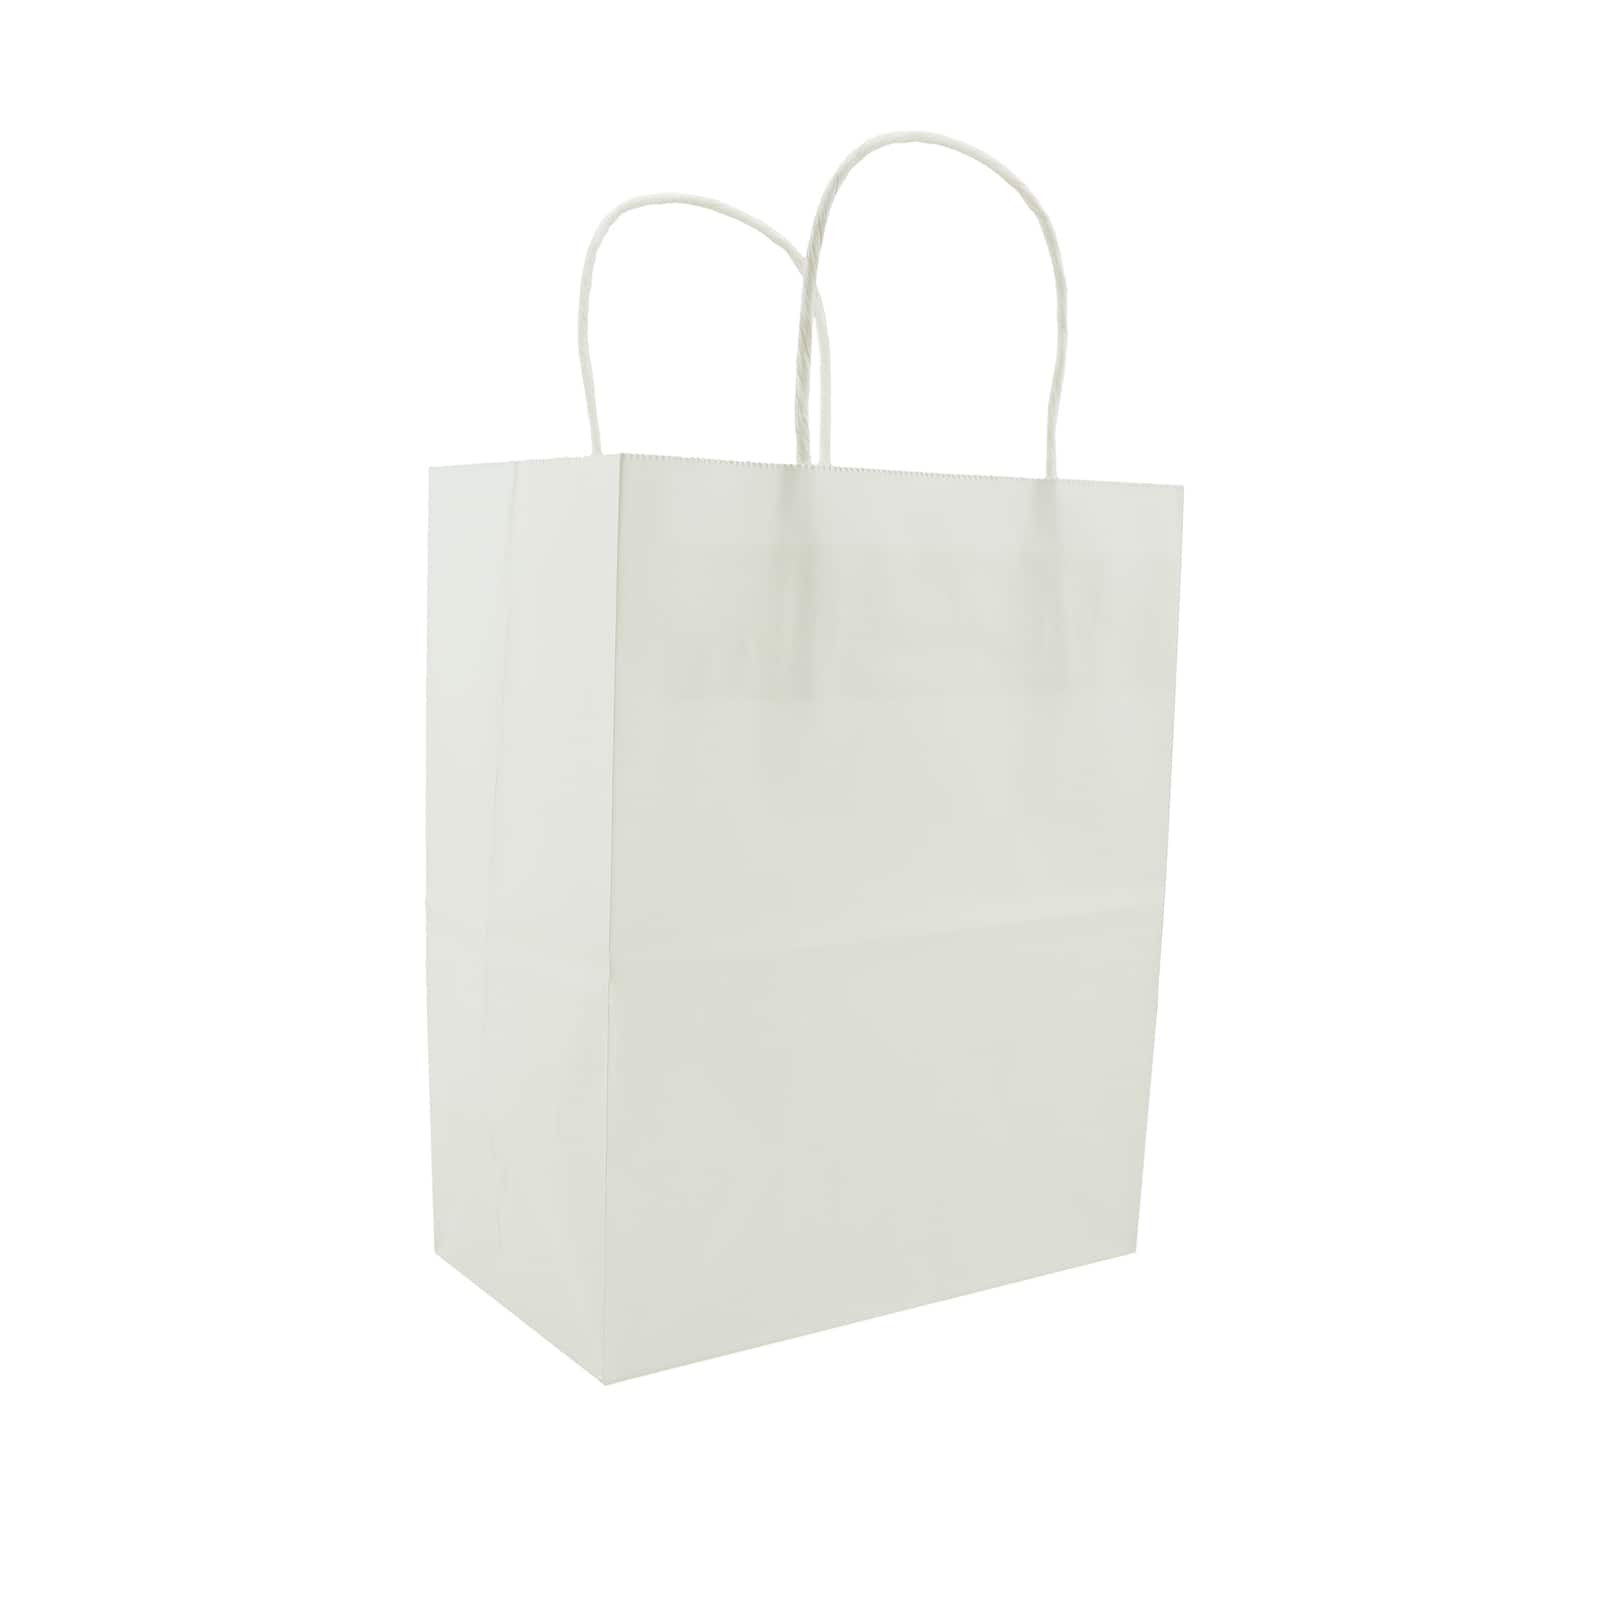 100 Paper Bags Elegant Swirl Black & White Cub Merchandise Shopping 8" x 5 x 10" 